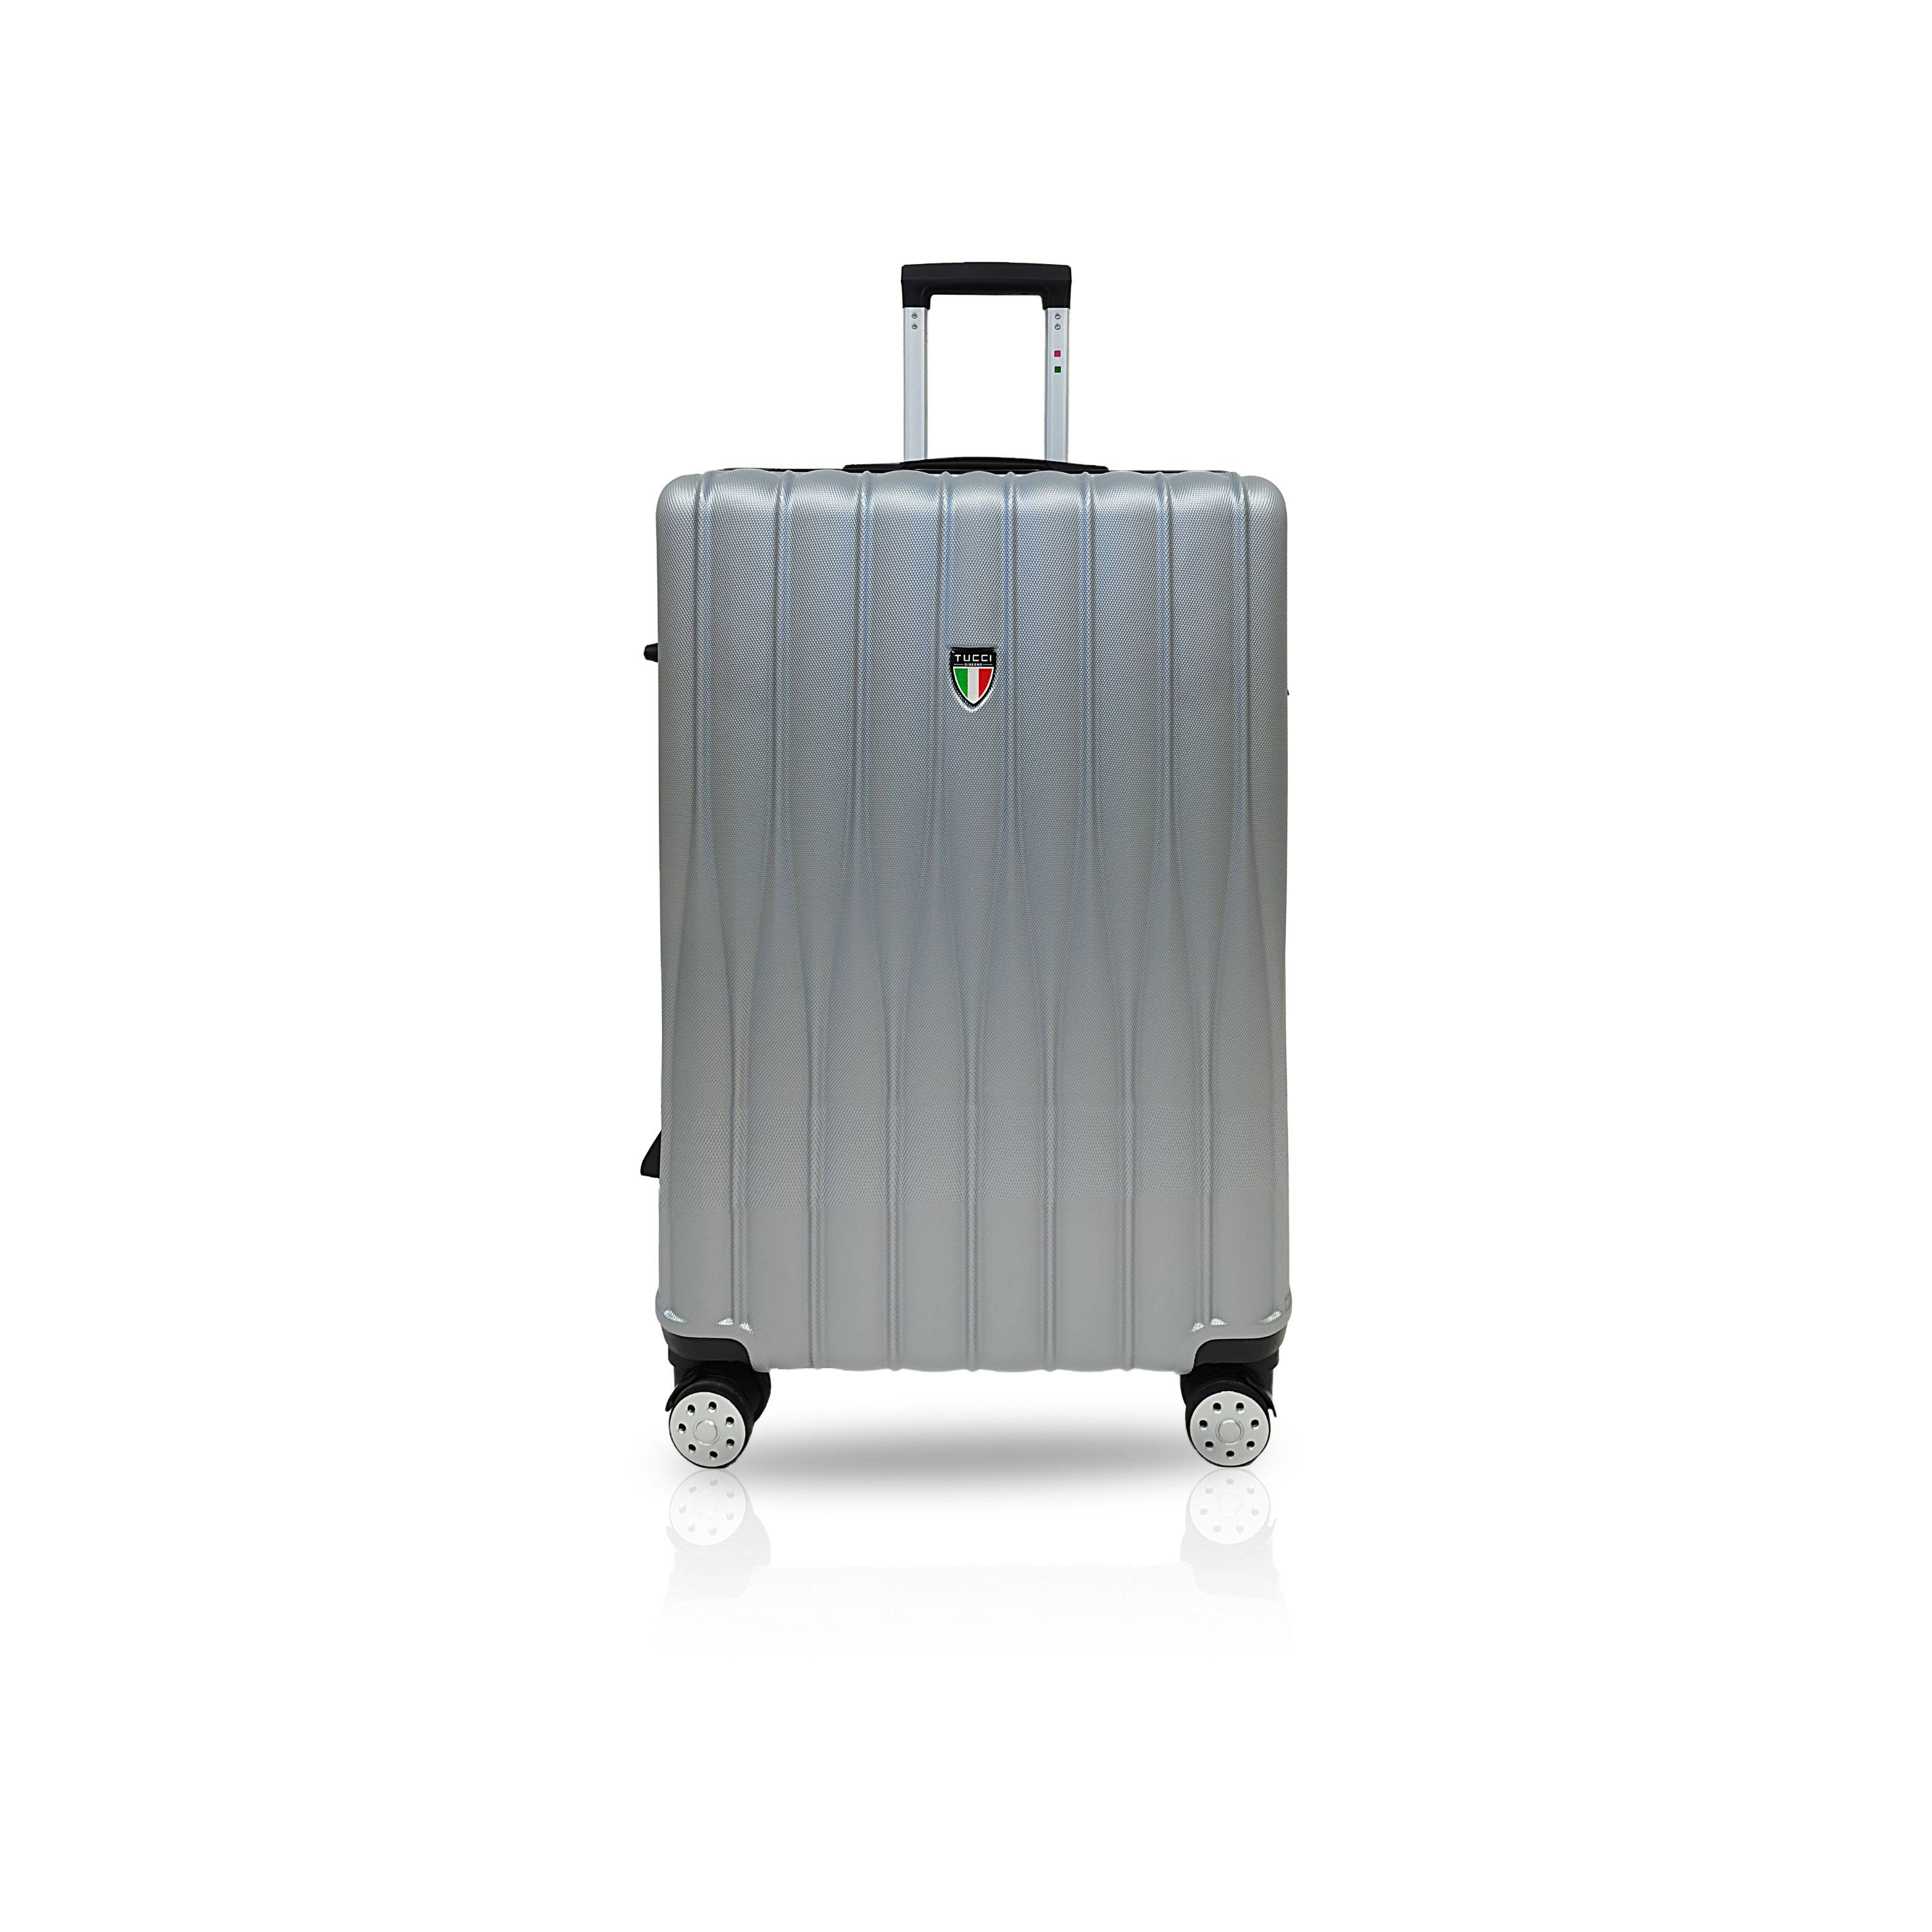 TUCCI BARATRO ABS 28" Large Luggage Suitcase